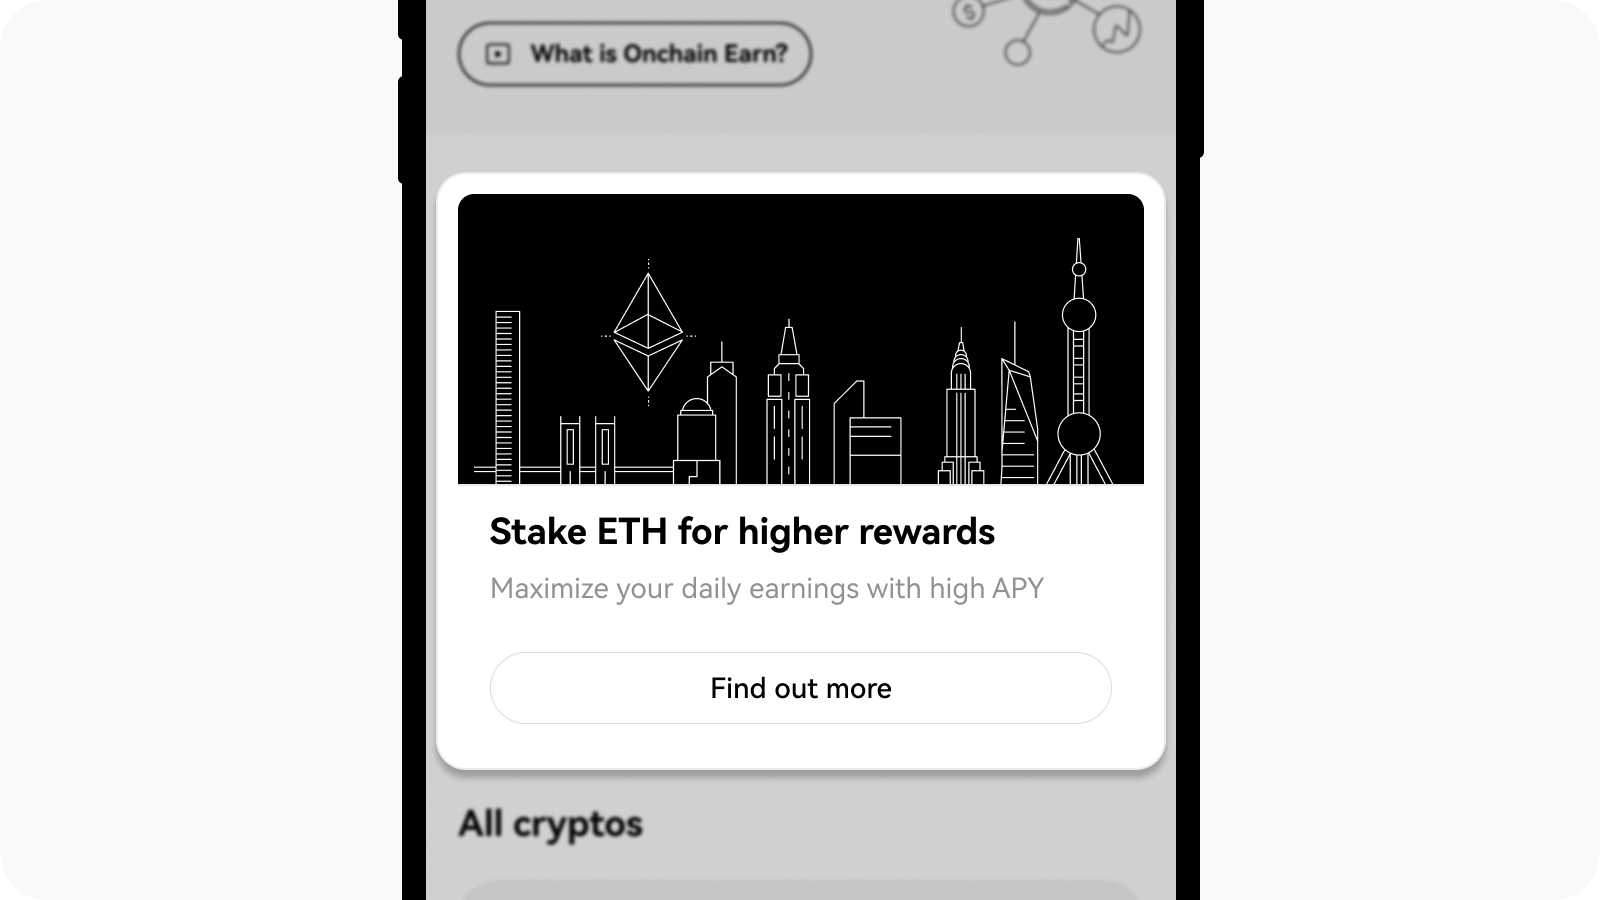 CT-app-onchain gain-ETH2.0 banner